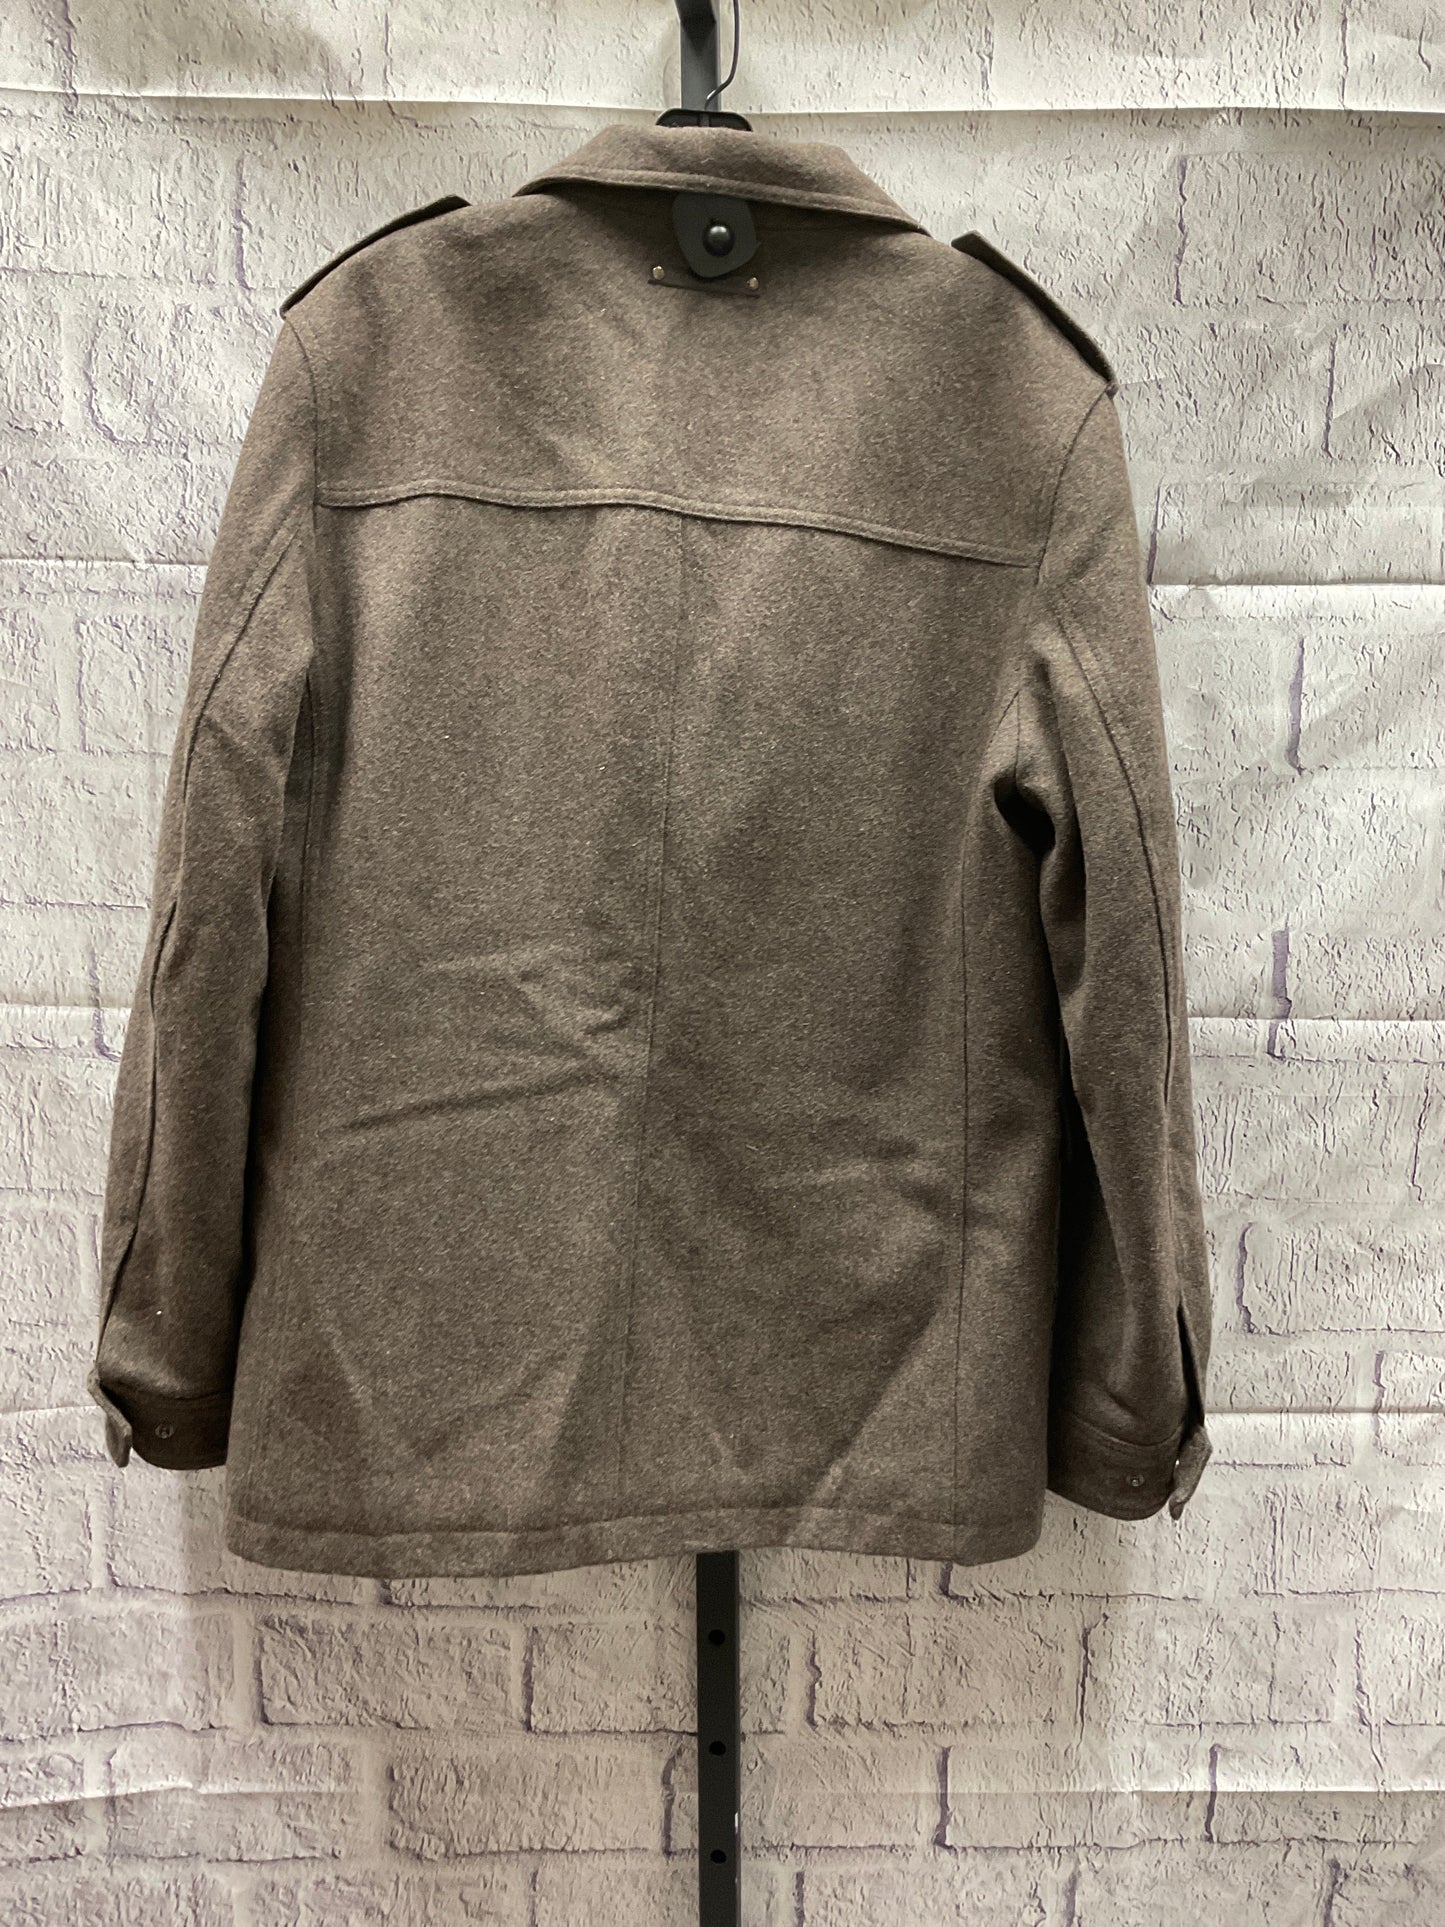 Coat Designer By Michael Kors  Size: S